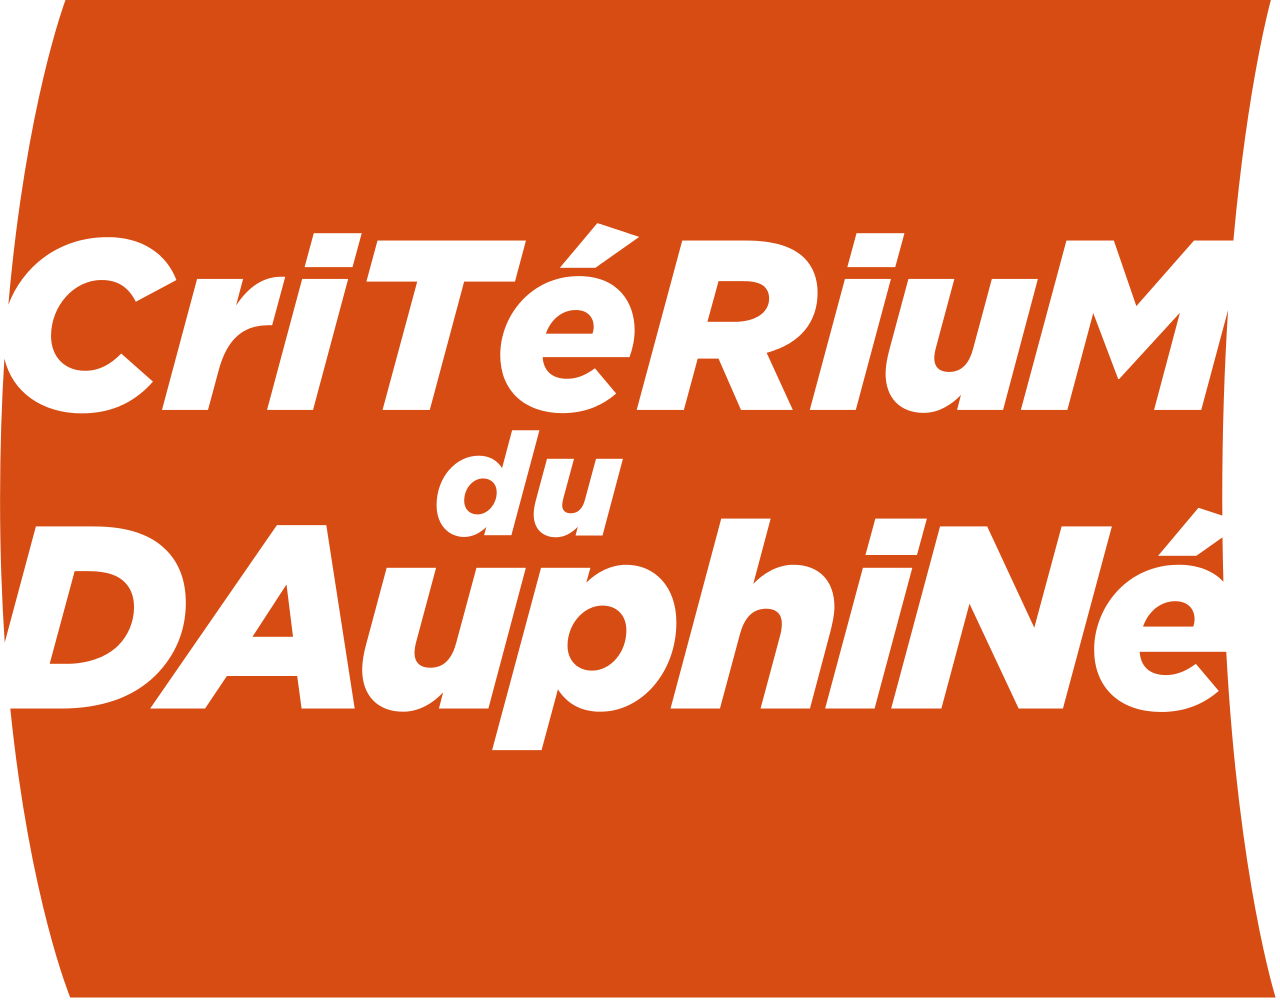 Resultado de imagen para criterium du dauphine 2019